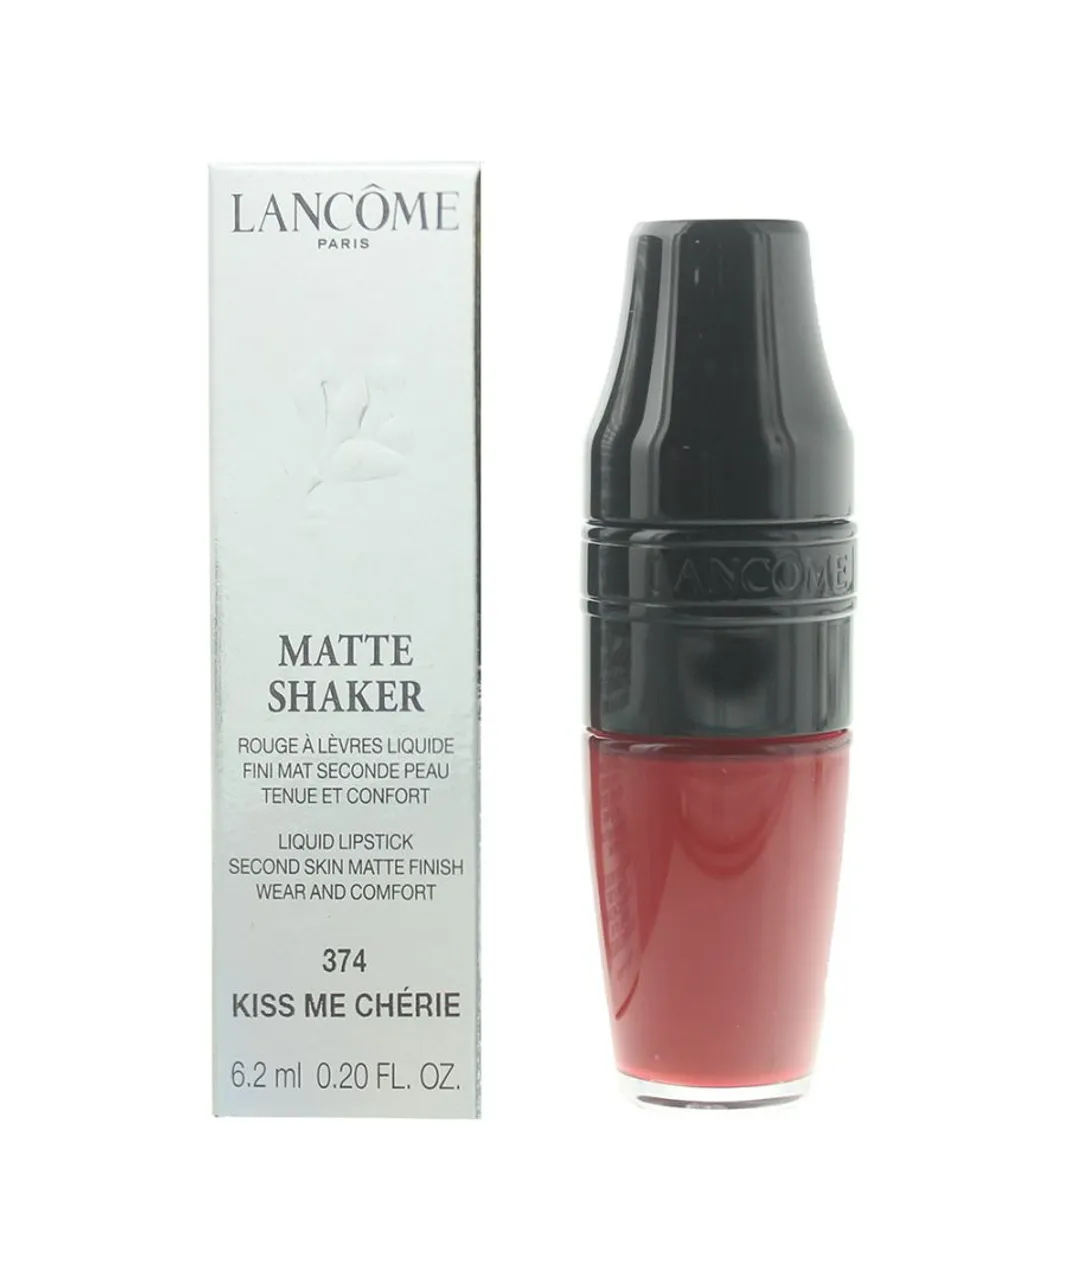 Lancome Unisex Lancôme Matte Shaker 374 Kiss Me Cherie Liquid Lipstick 6.1ml - NA - One Size